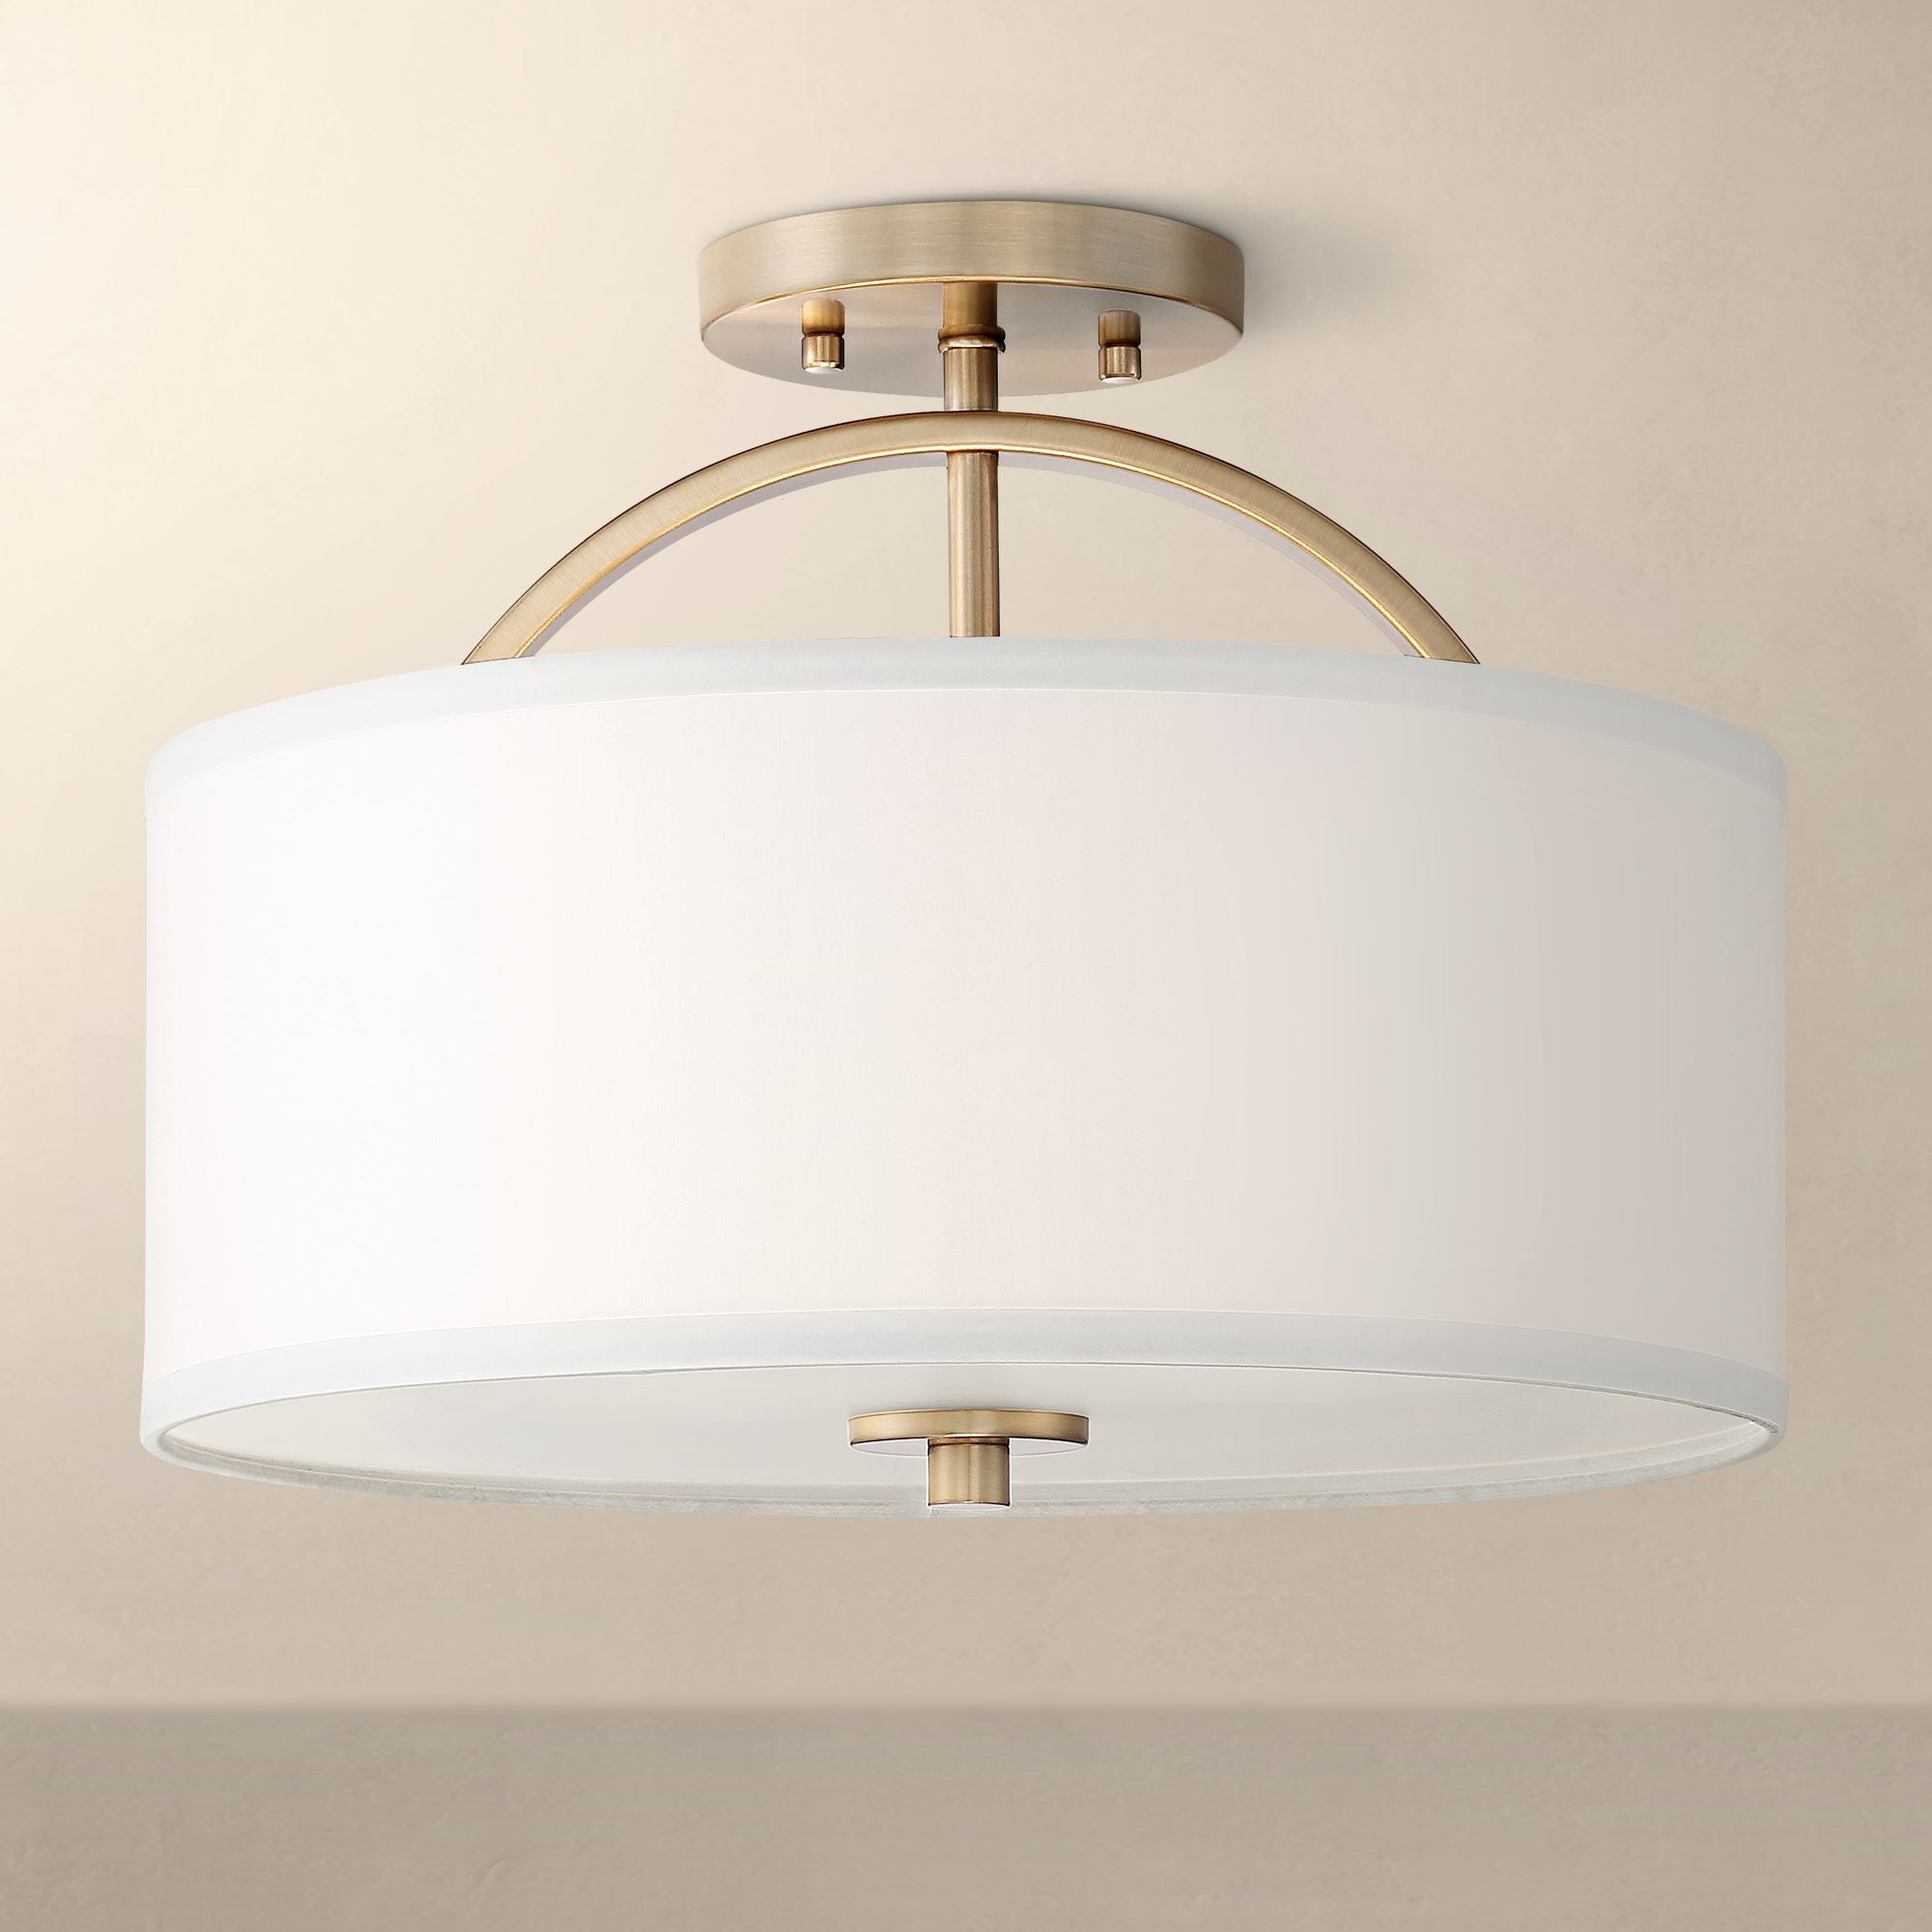 Possini Euro Design Modern Ceiling Light Semi Flush Mount Fixture Warm